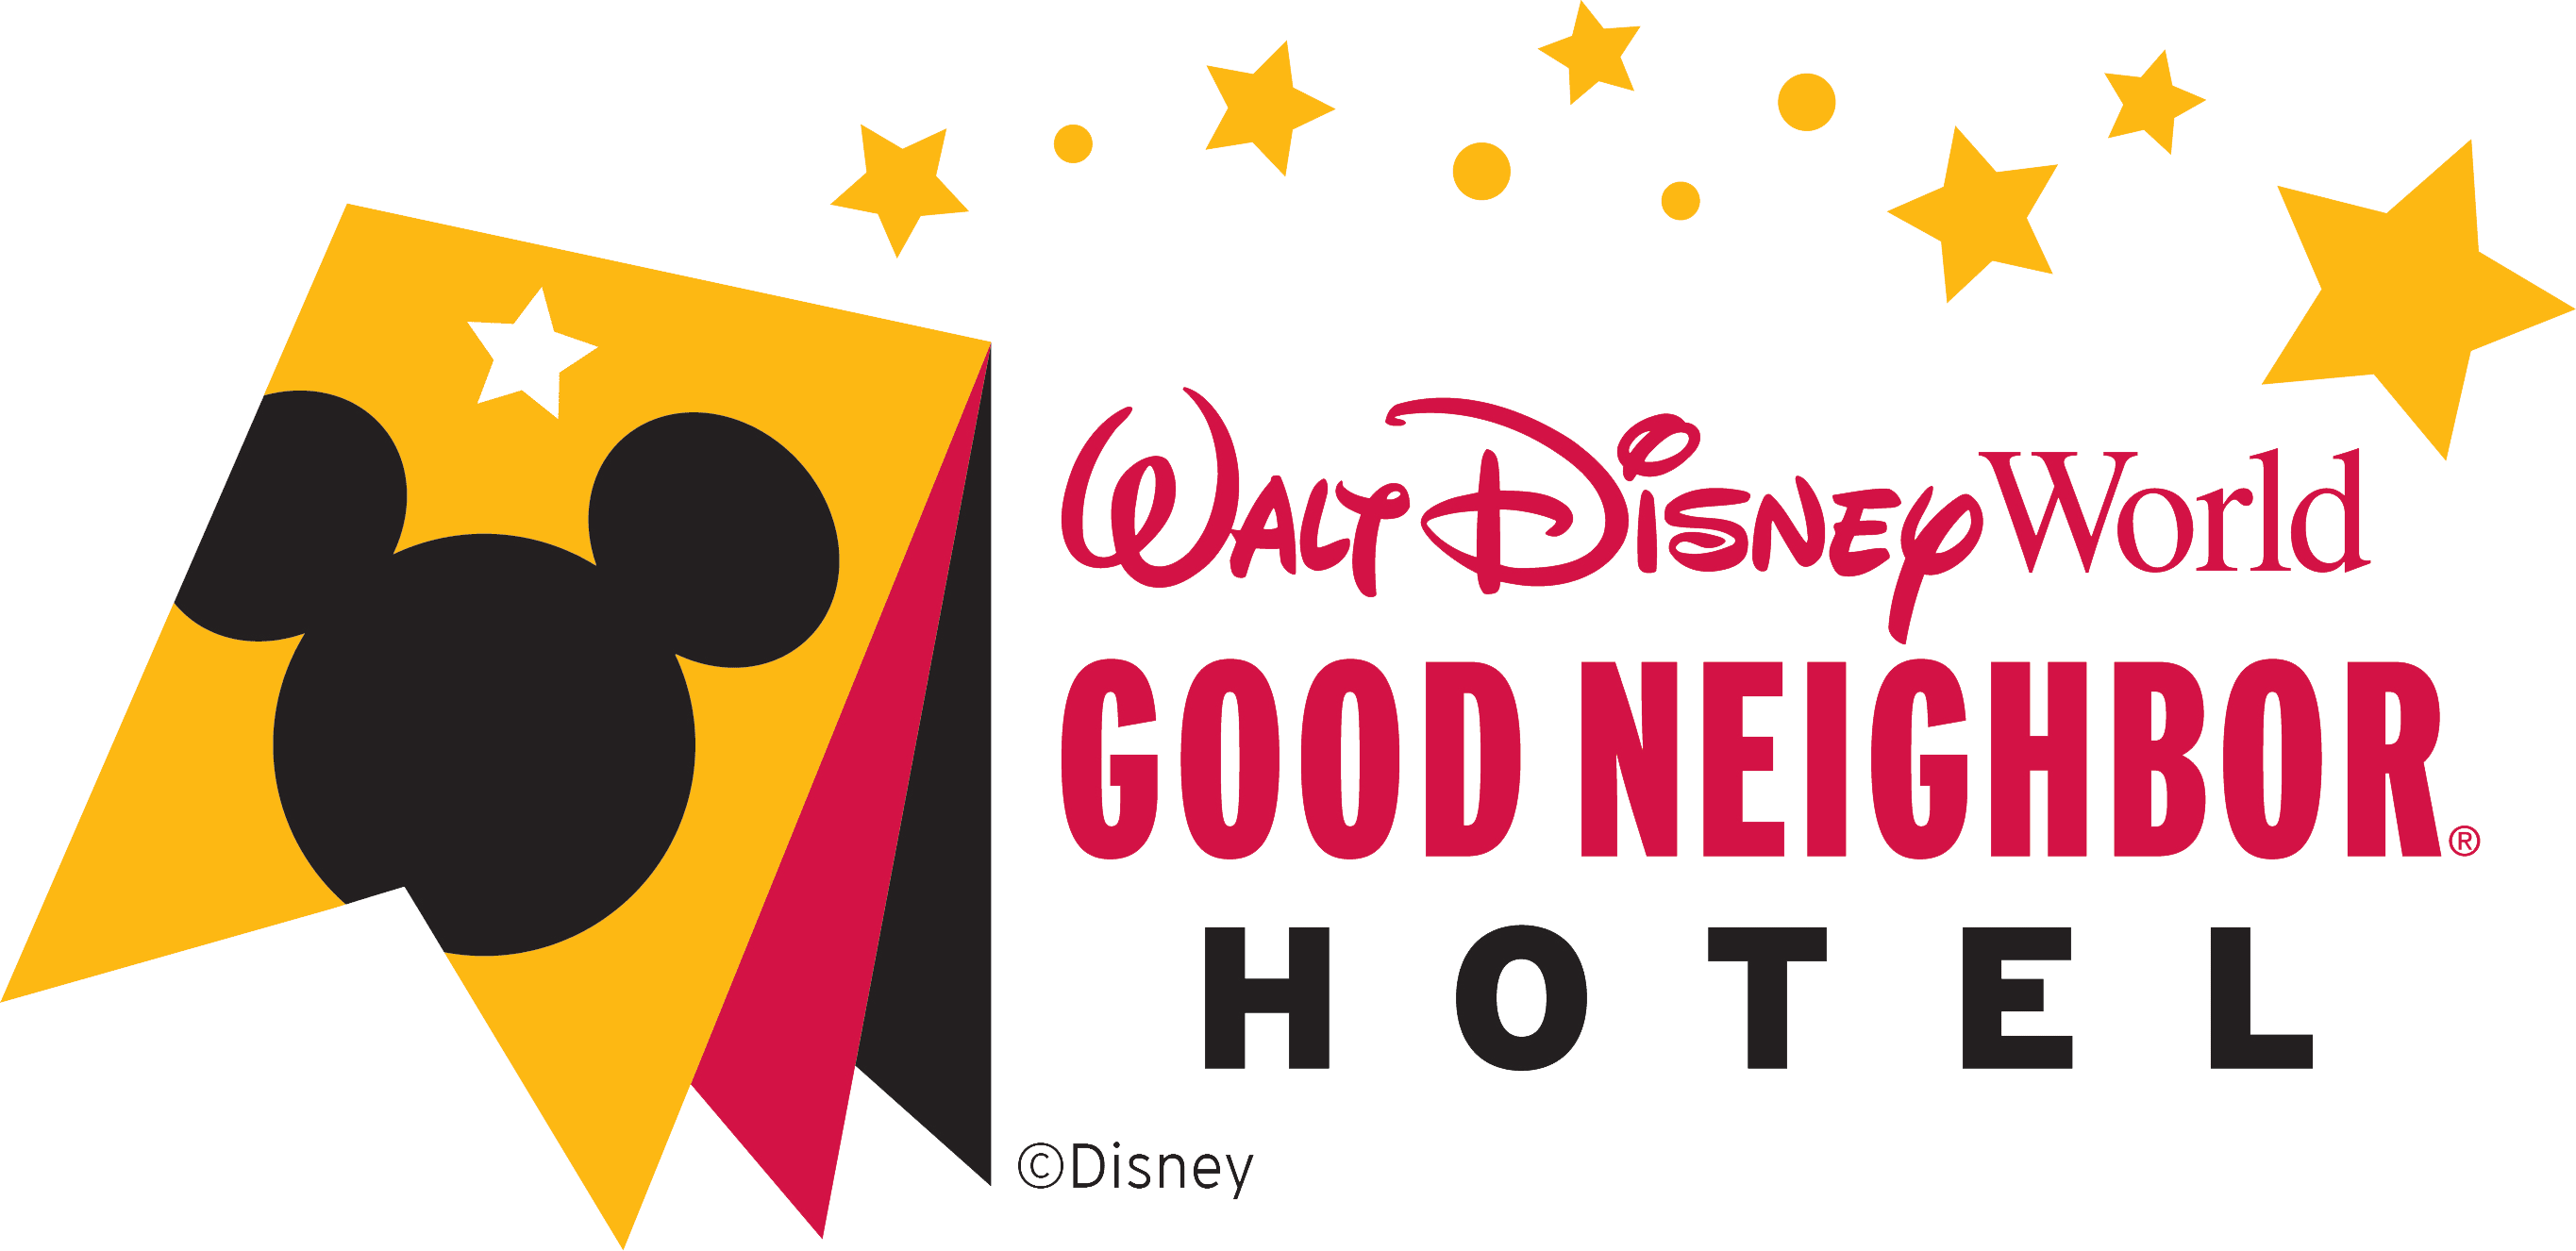 Logotipo do Walt Disney World® Good Neighbor Hotel